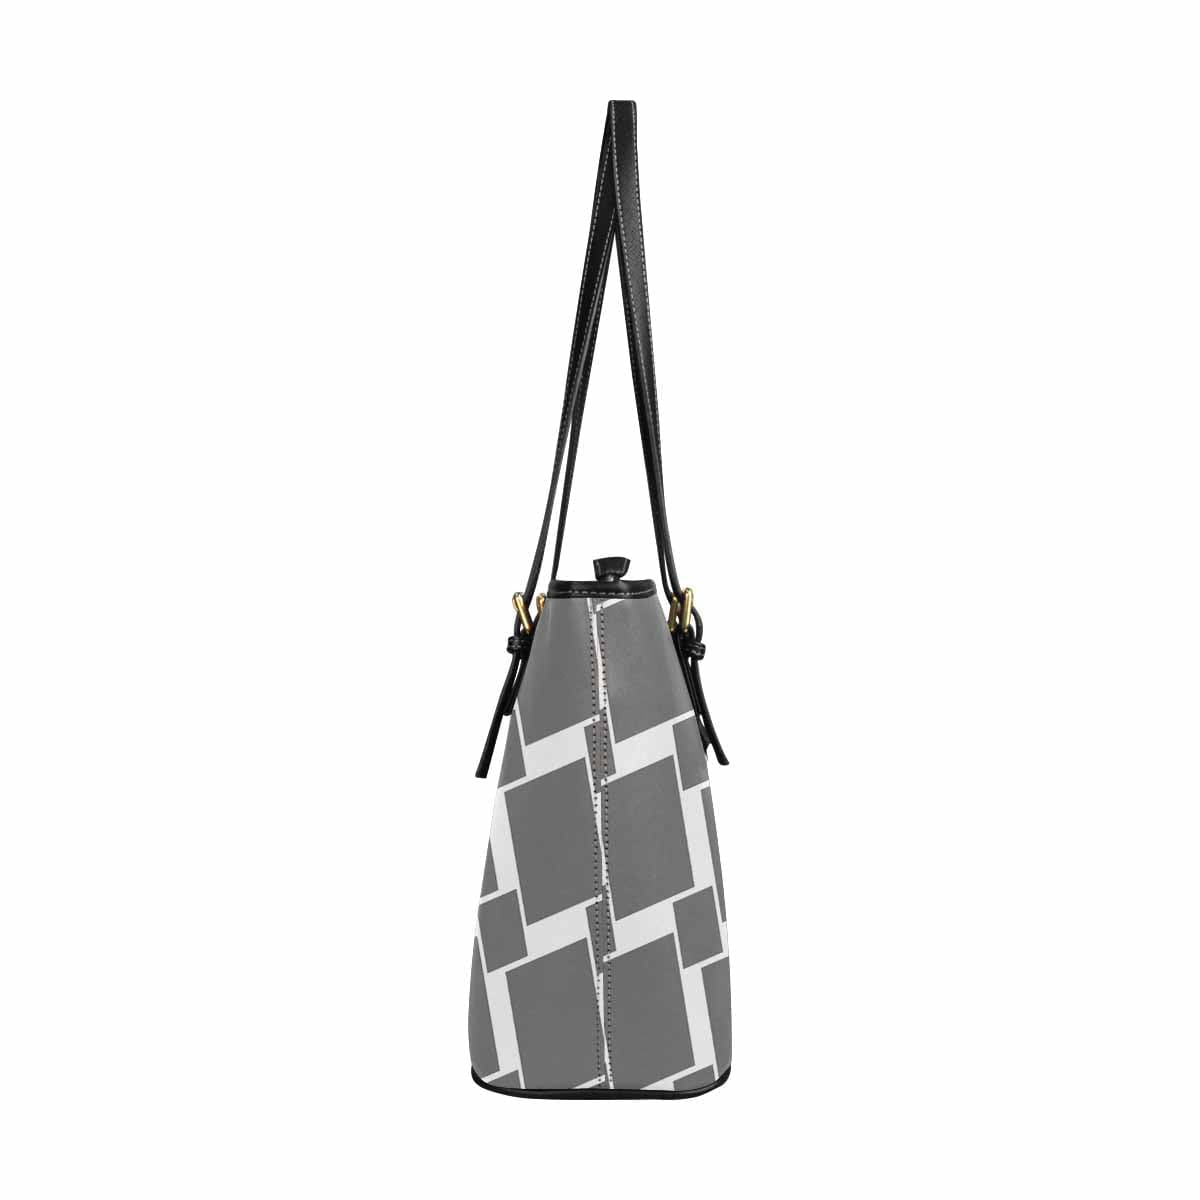 Large Leather Tote Shoulder Bag - Grey And White Grid Illustration - Bags